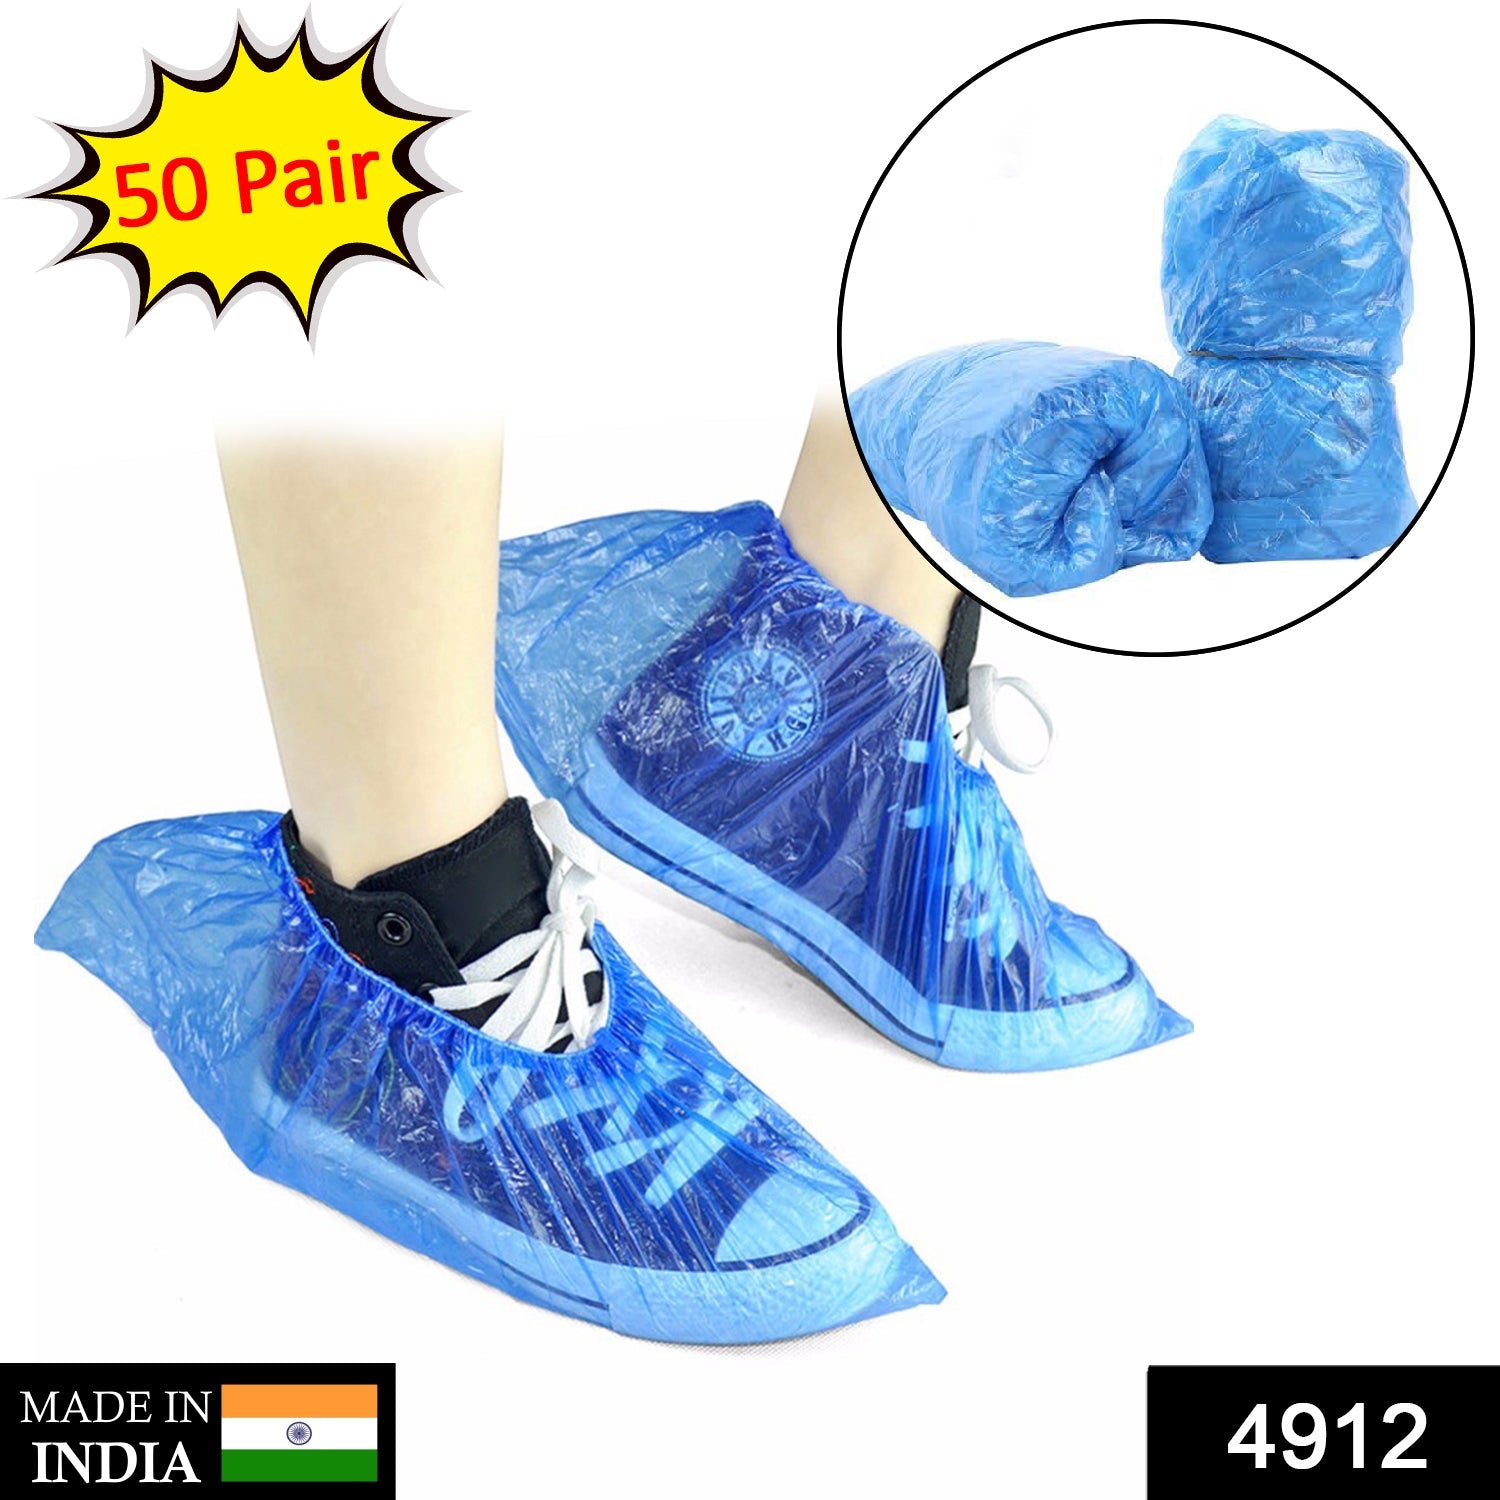 4912 Type Plastic Elastic Top Disposable Shoe Cover for Rainy Season (50 Pairs) DeoDap